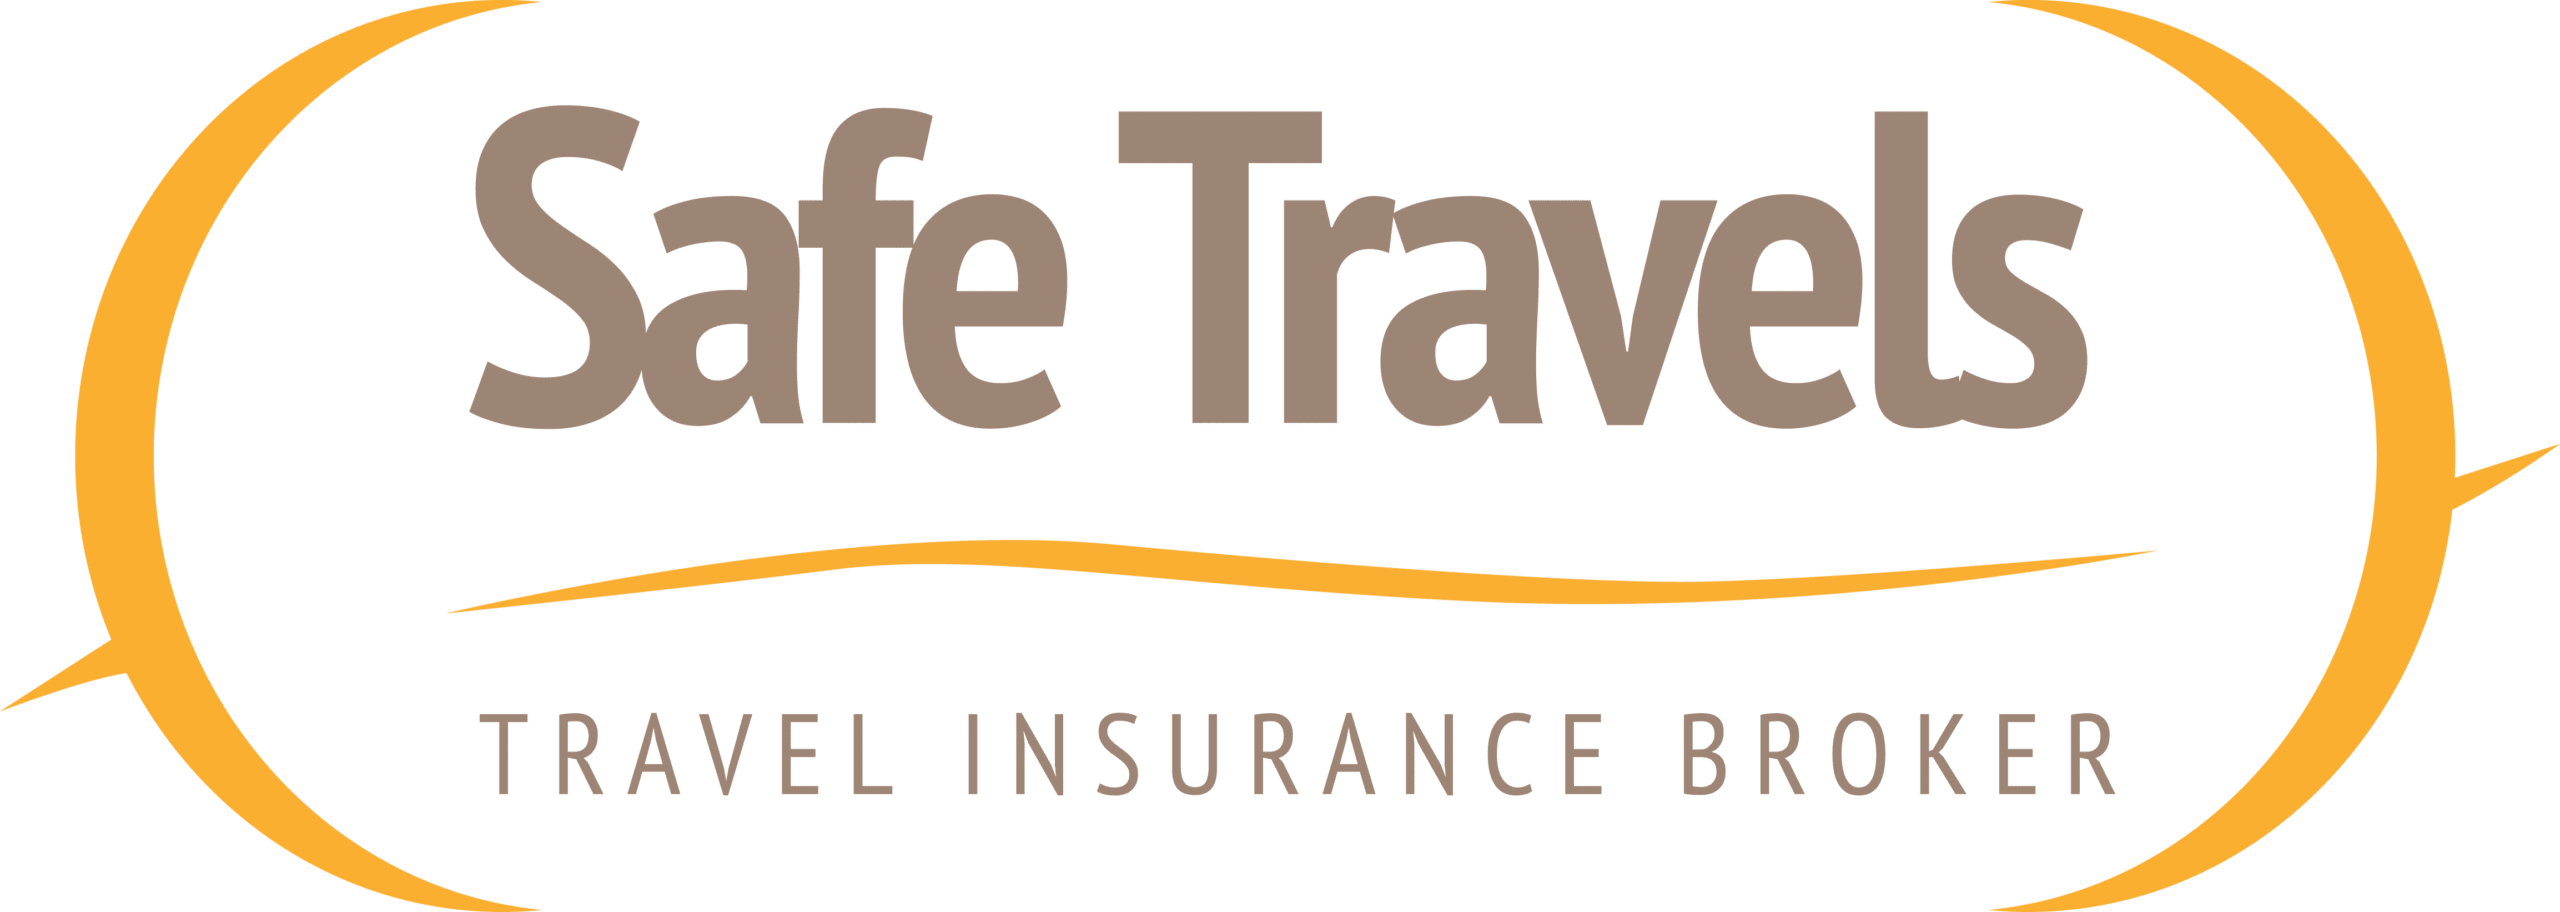 safe travel company